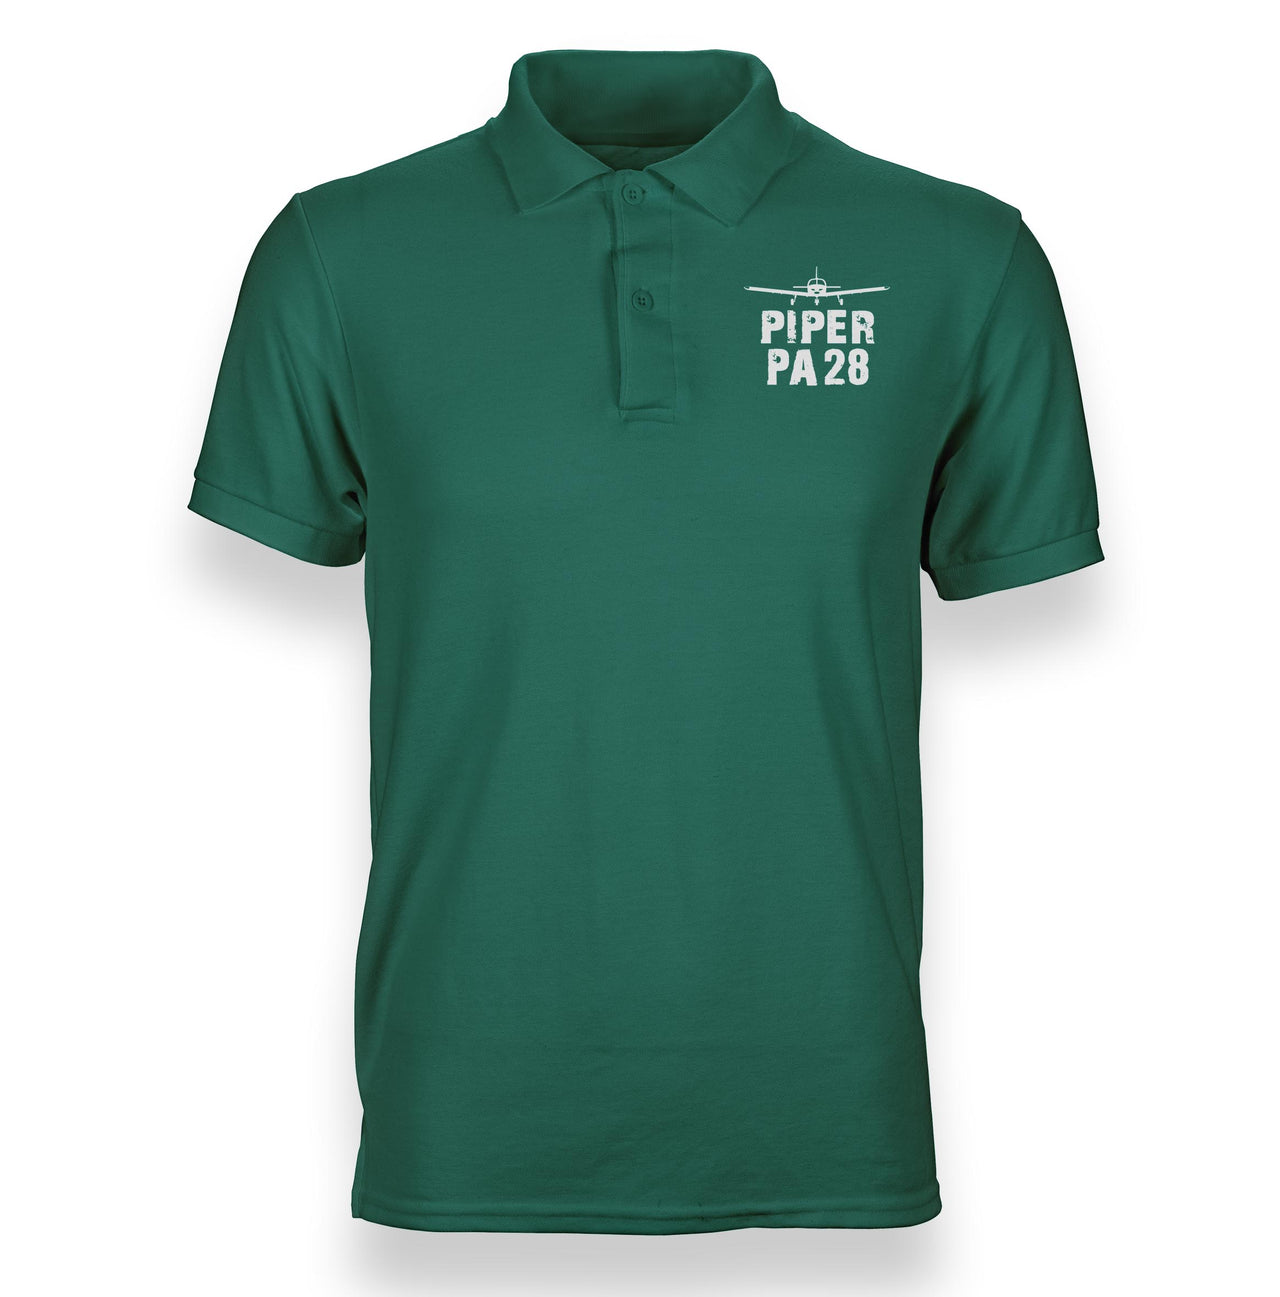 Piper PA28 & Plane Designed Polo T-Shirts